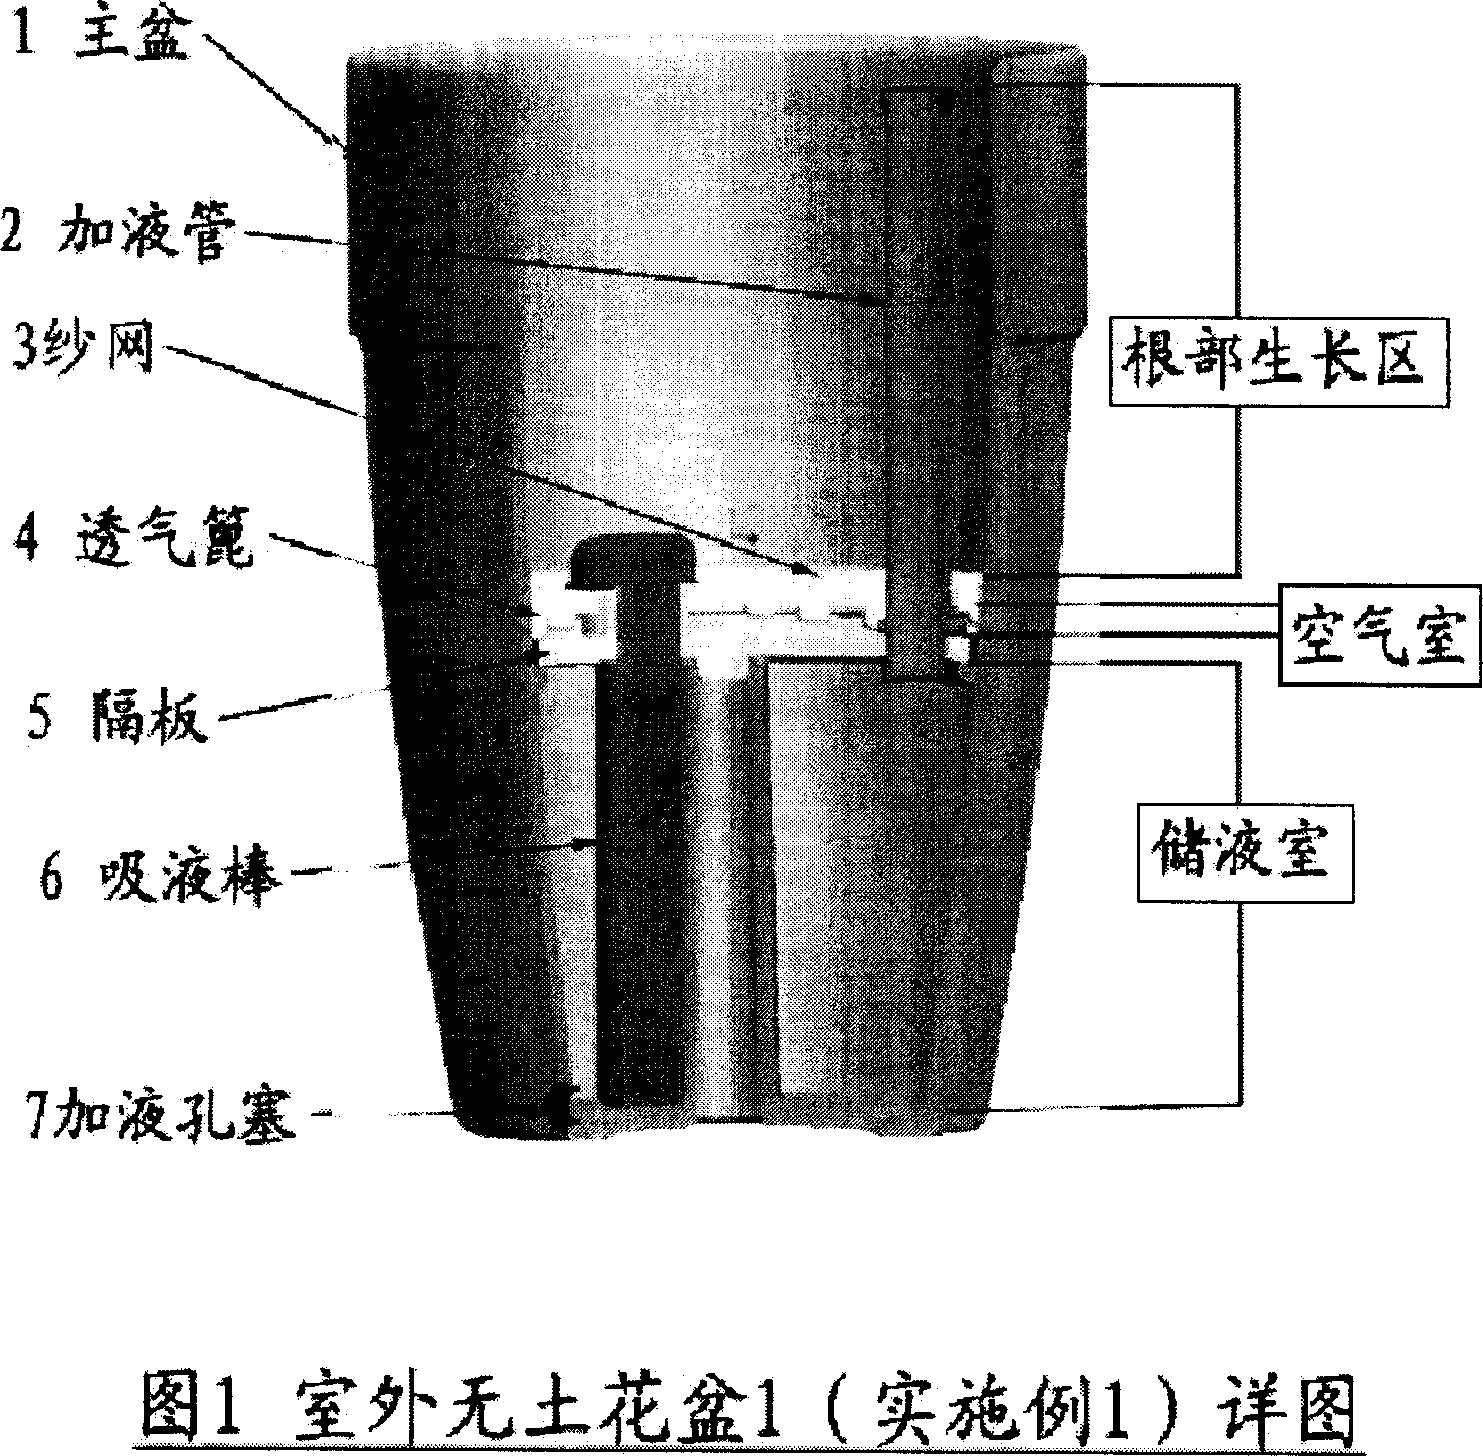 Multi-functional soilless flowerpot with large liquid storage reservoir